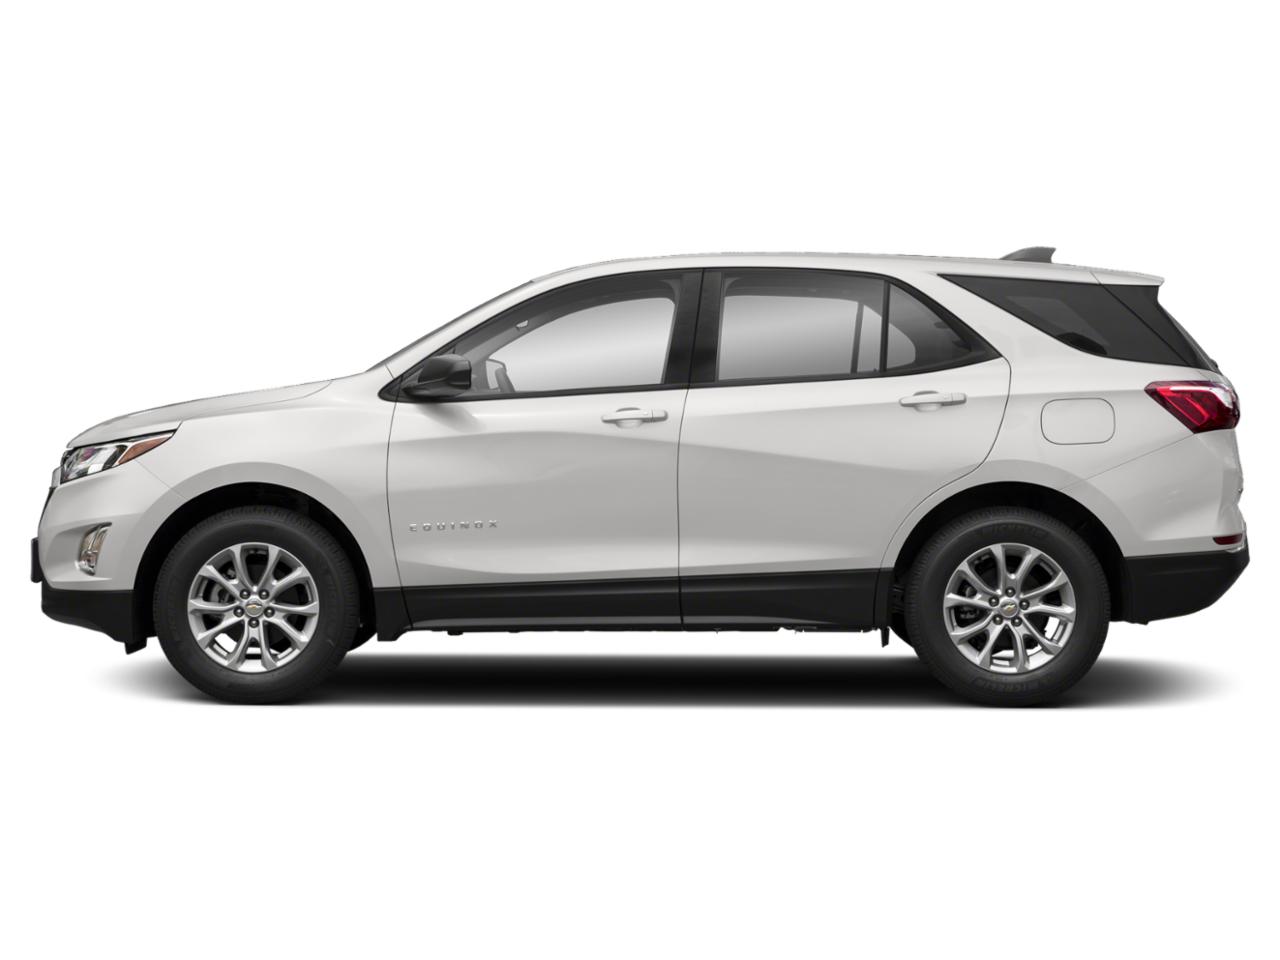 Newnan Summit White 2019 Chevrolet Equinox used SUV for Sale 2Z20271AB